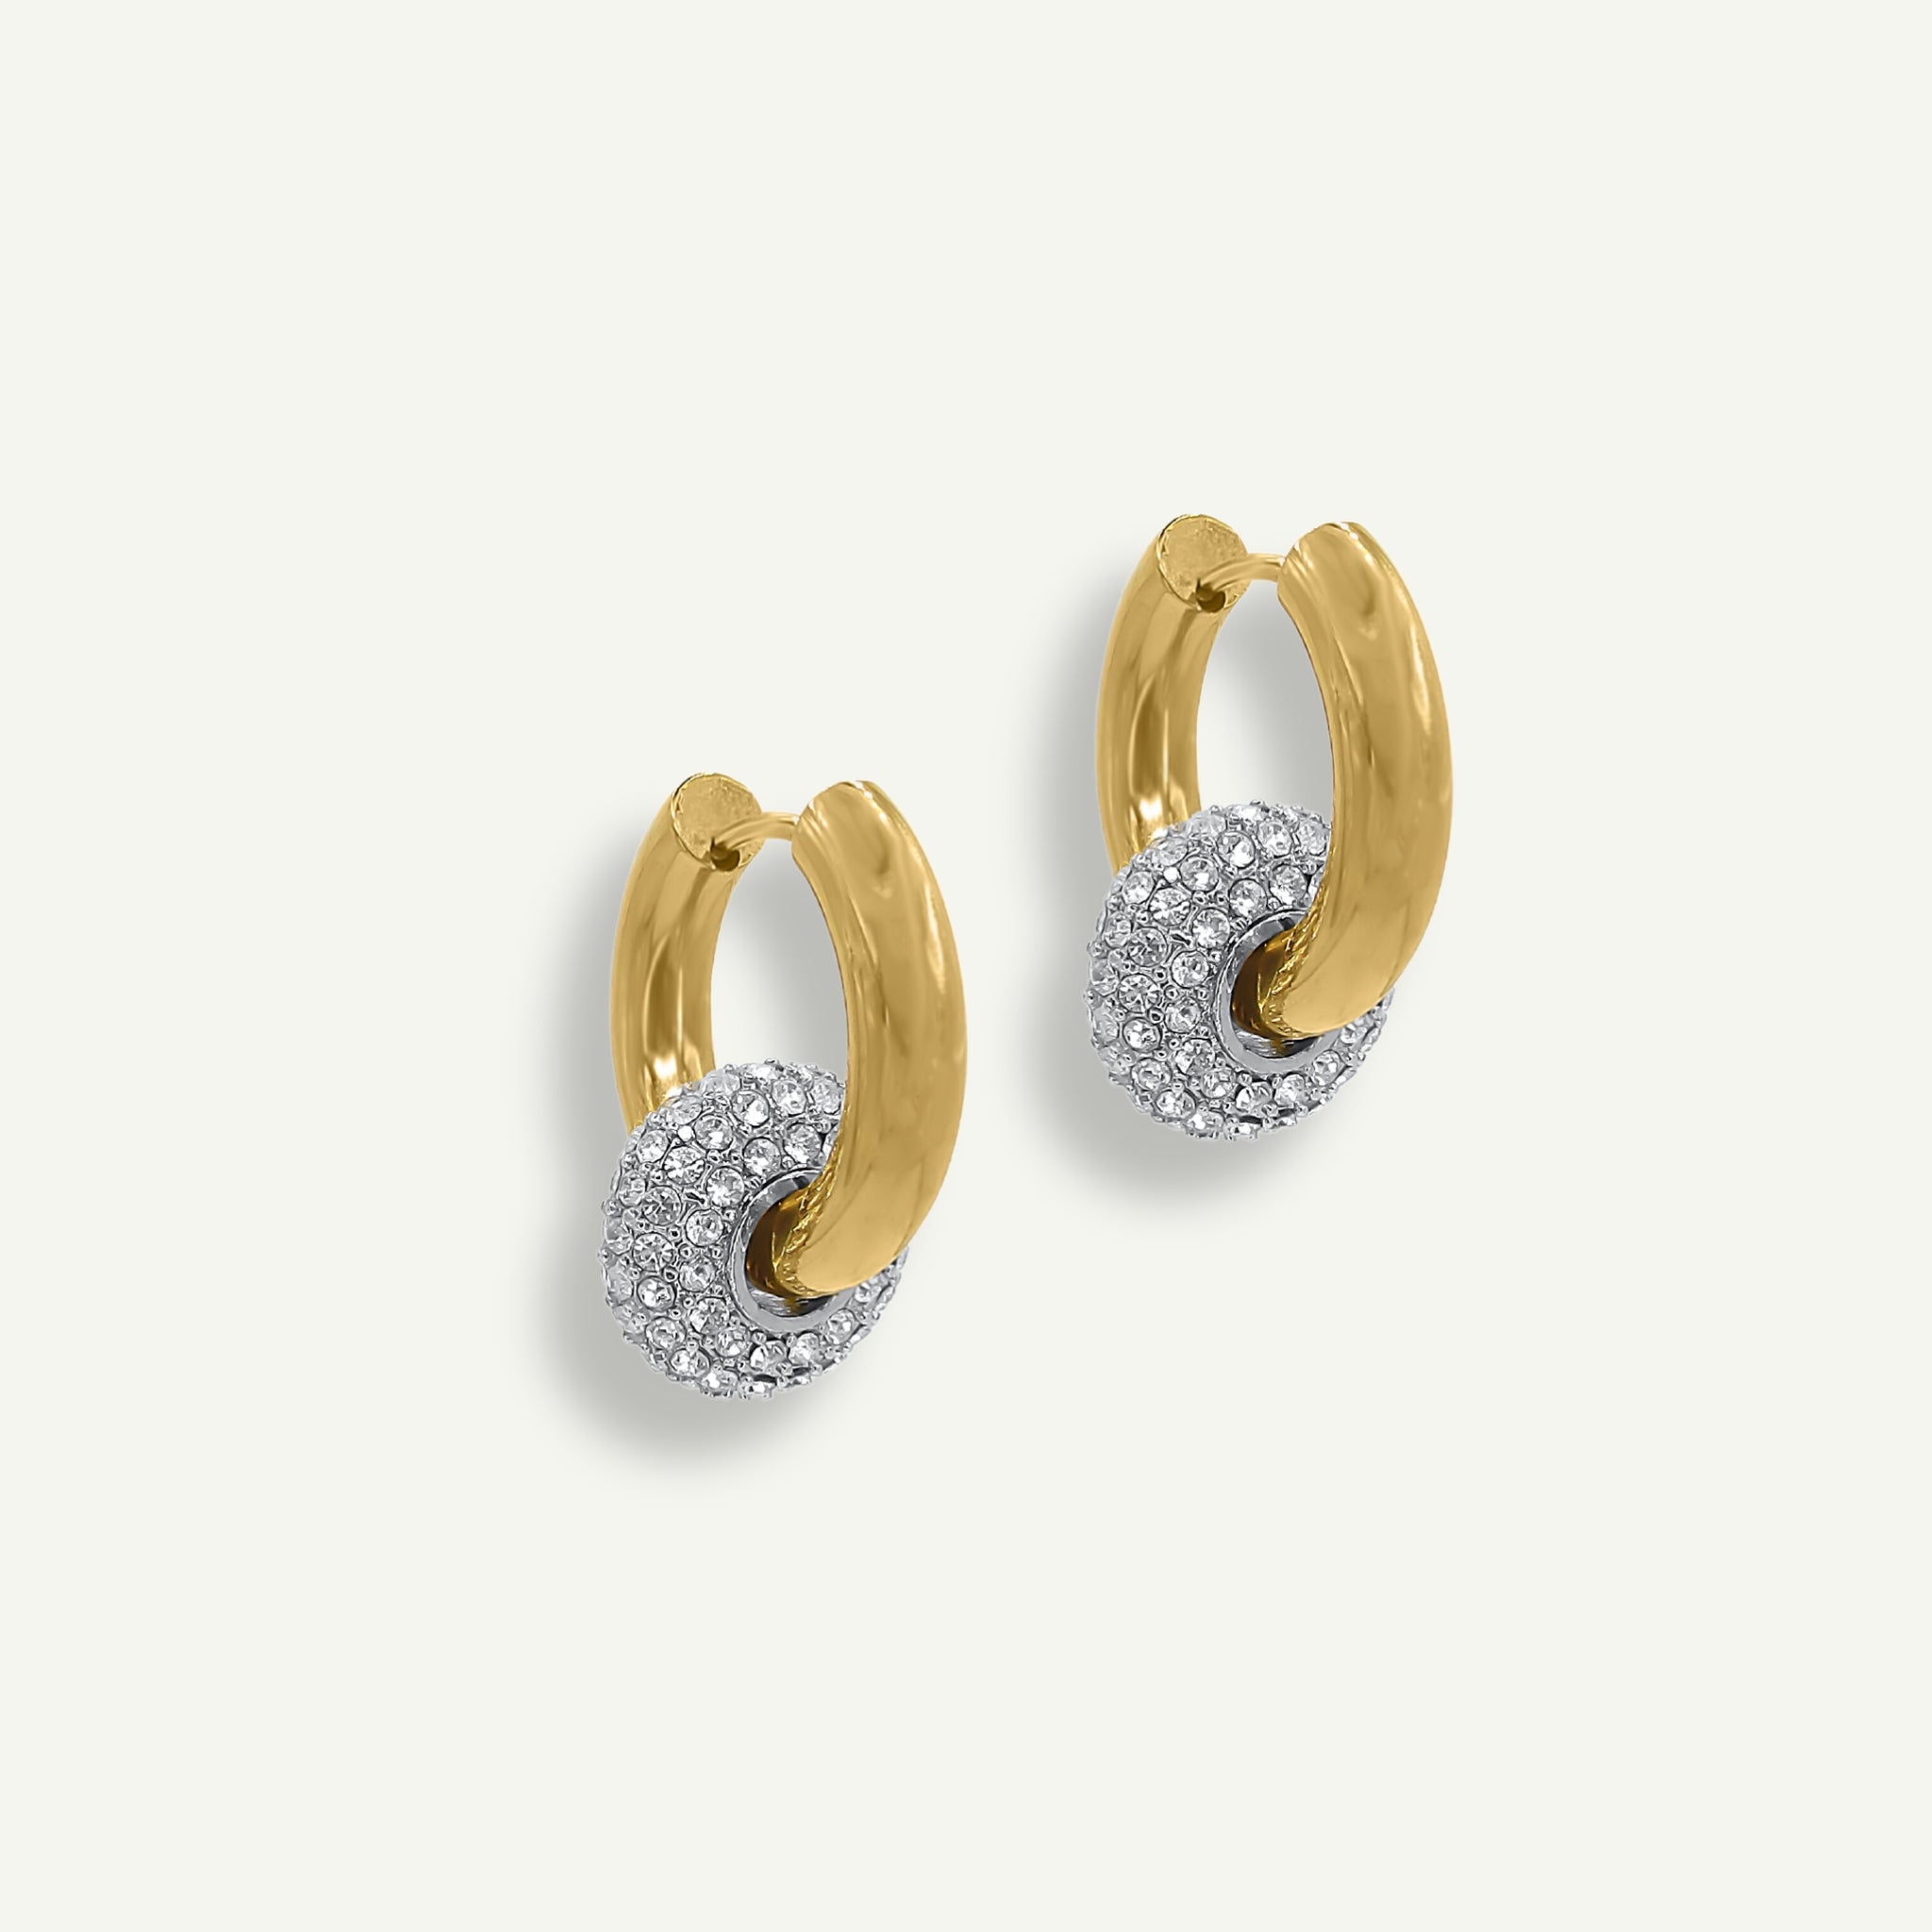 Circle Crush | Hoops - Stainless steel, 18k gold plated earrings - waterproof hoops - must have jewelry - Jewel Your Way